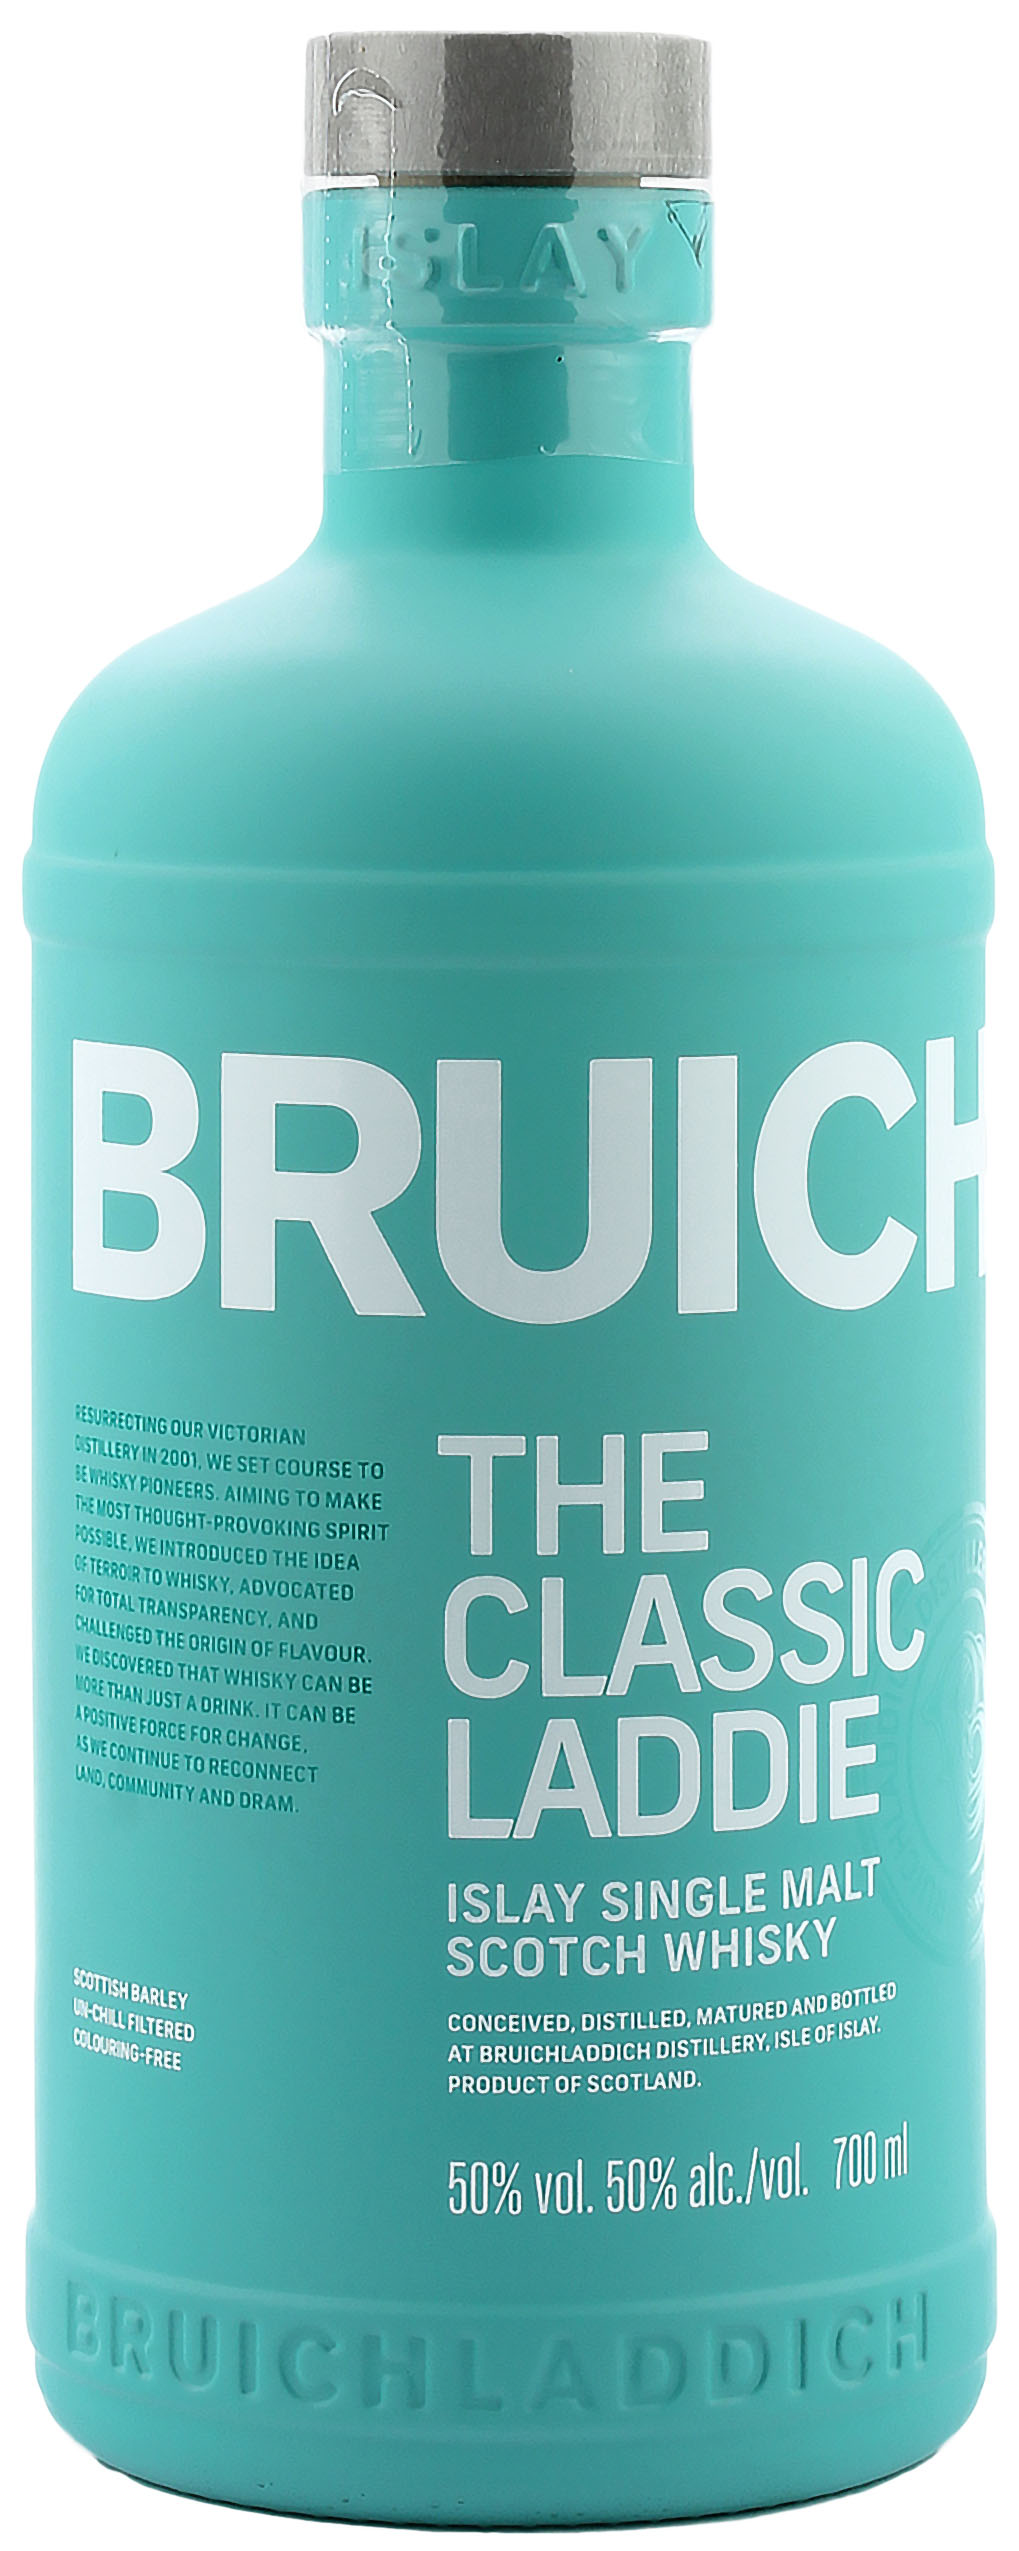 Bruichladdich Scottish Barley The Classic Laddie 50.0% 0,7l